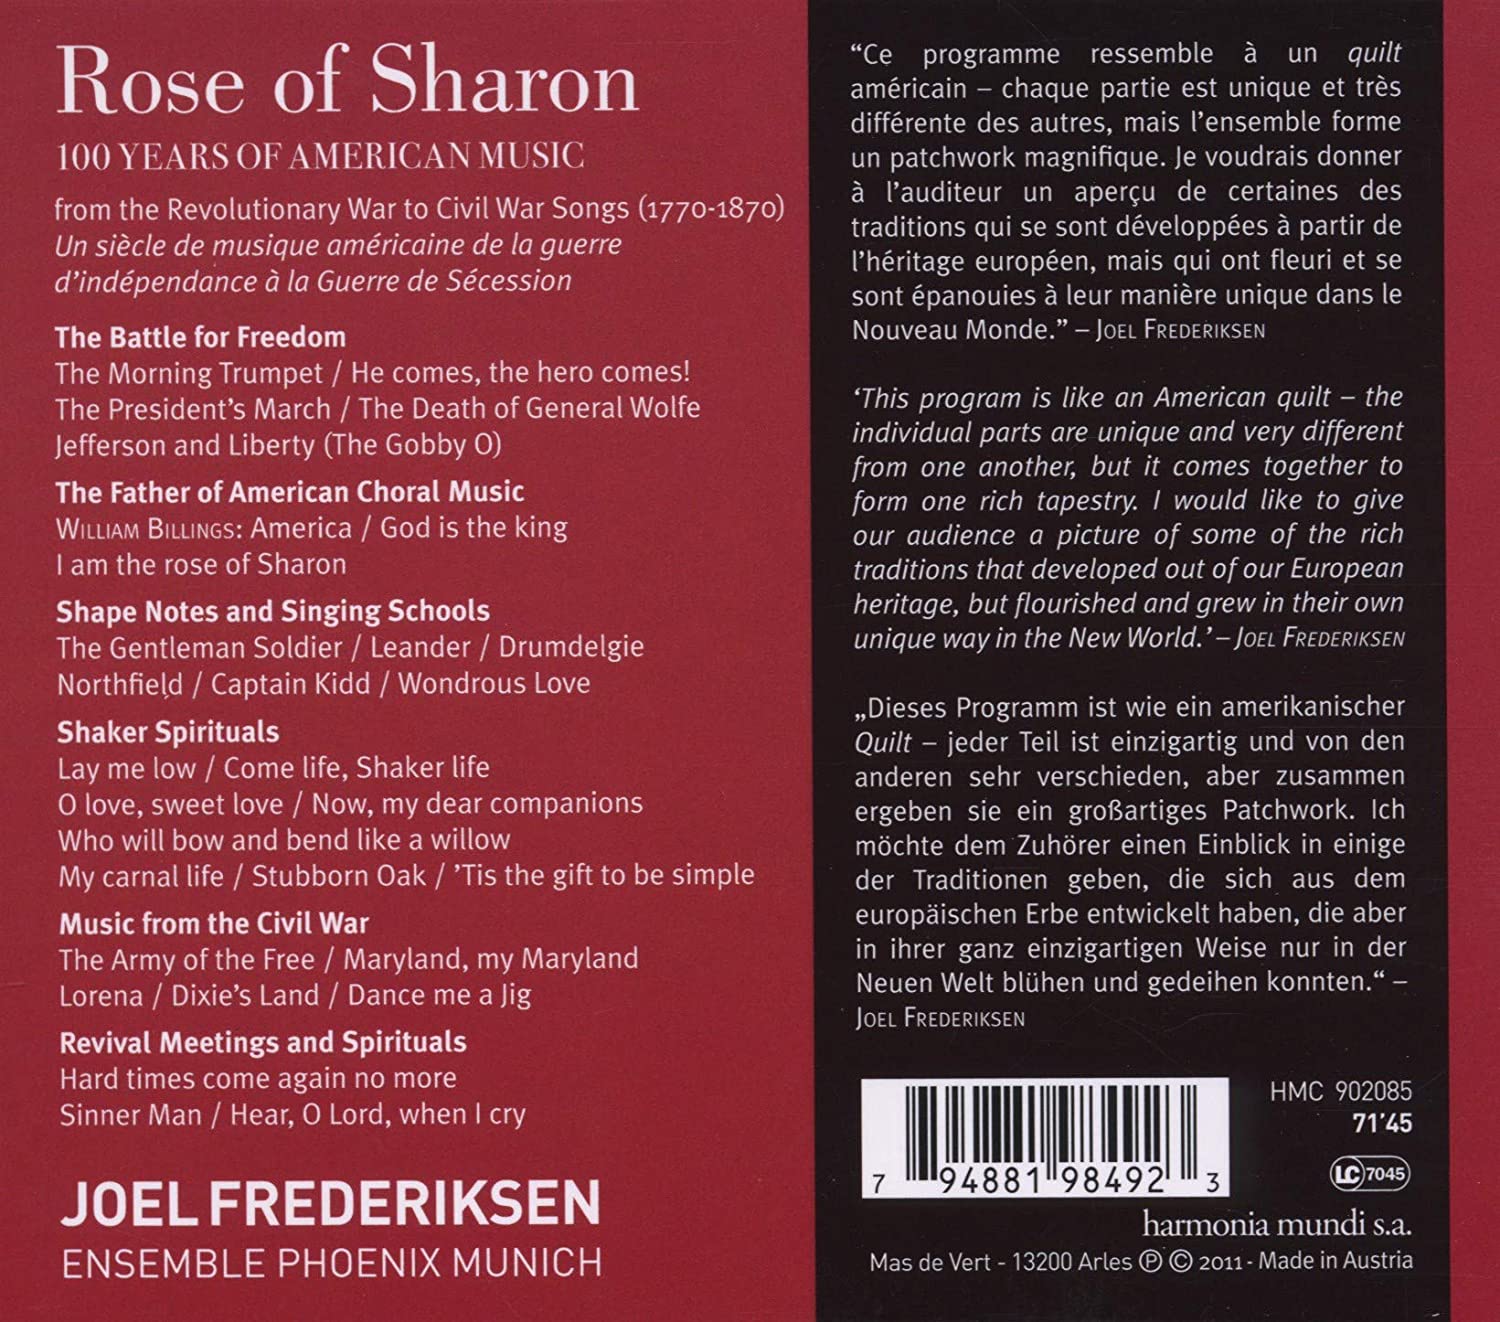 Rose of Sharon, 100 years of American Music (1770-1870) - slide-1